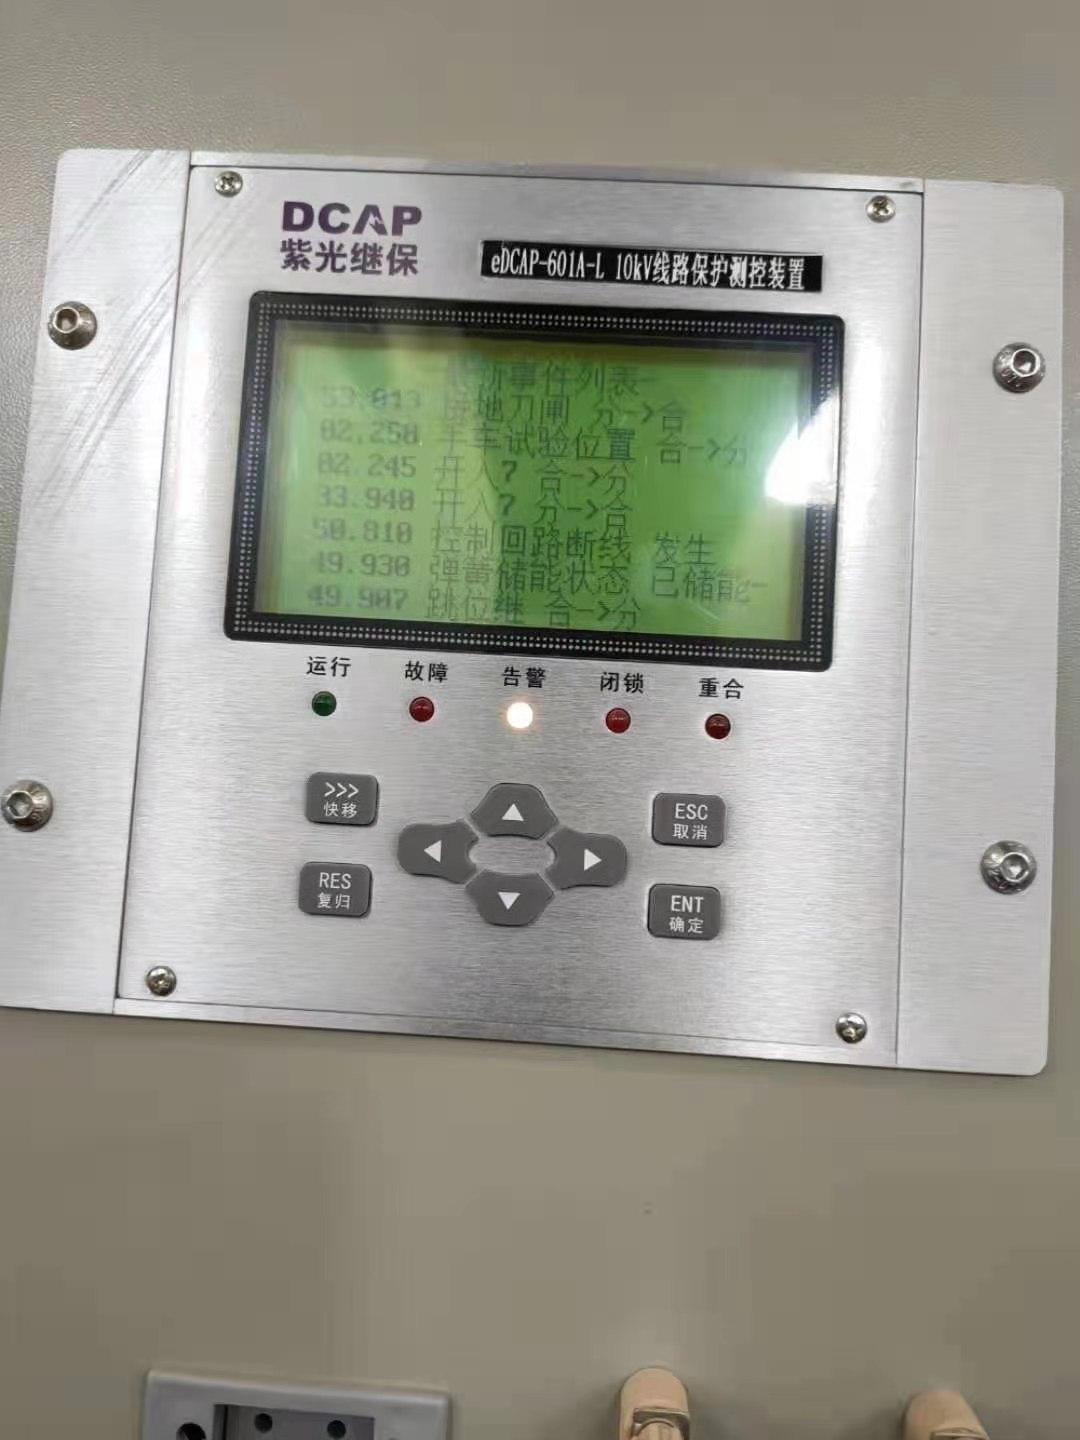 eDCAP-601A清华紫光通用保护测控装置